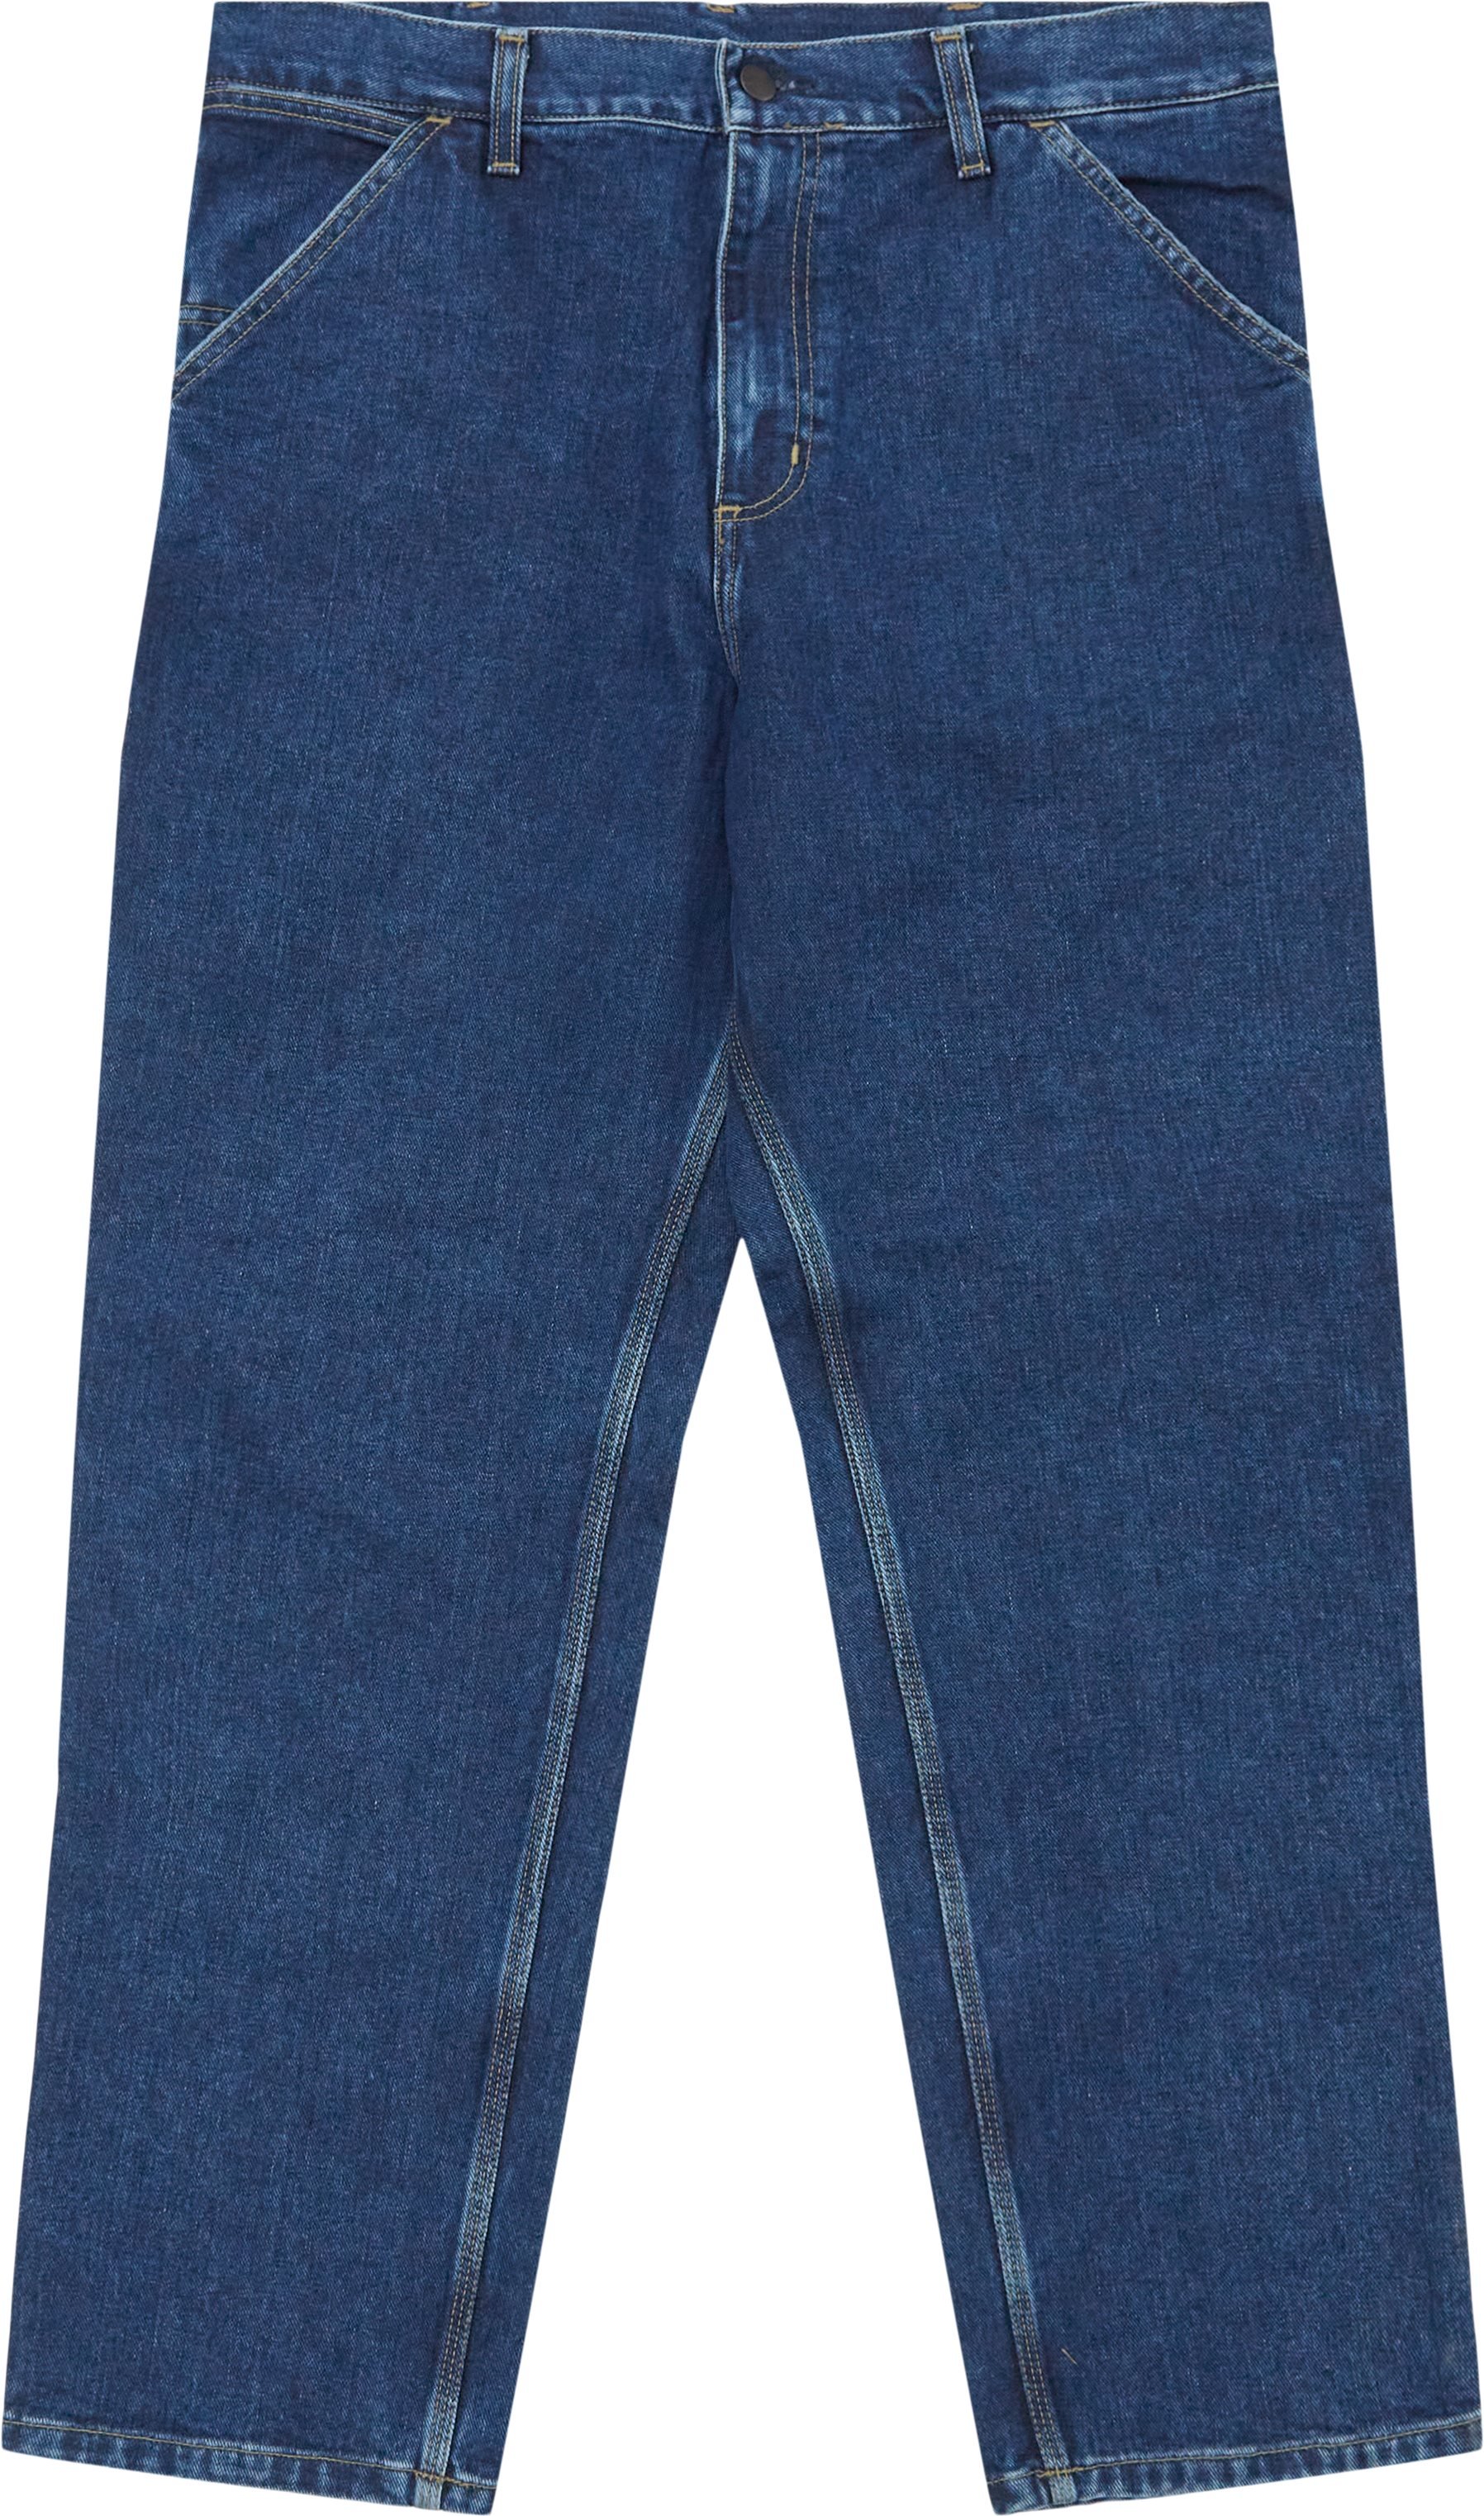 Carhartt WIP Jeans SINGLE KNEE PANT I032024.0106 Denim